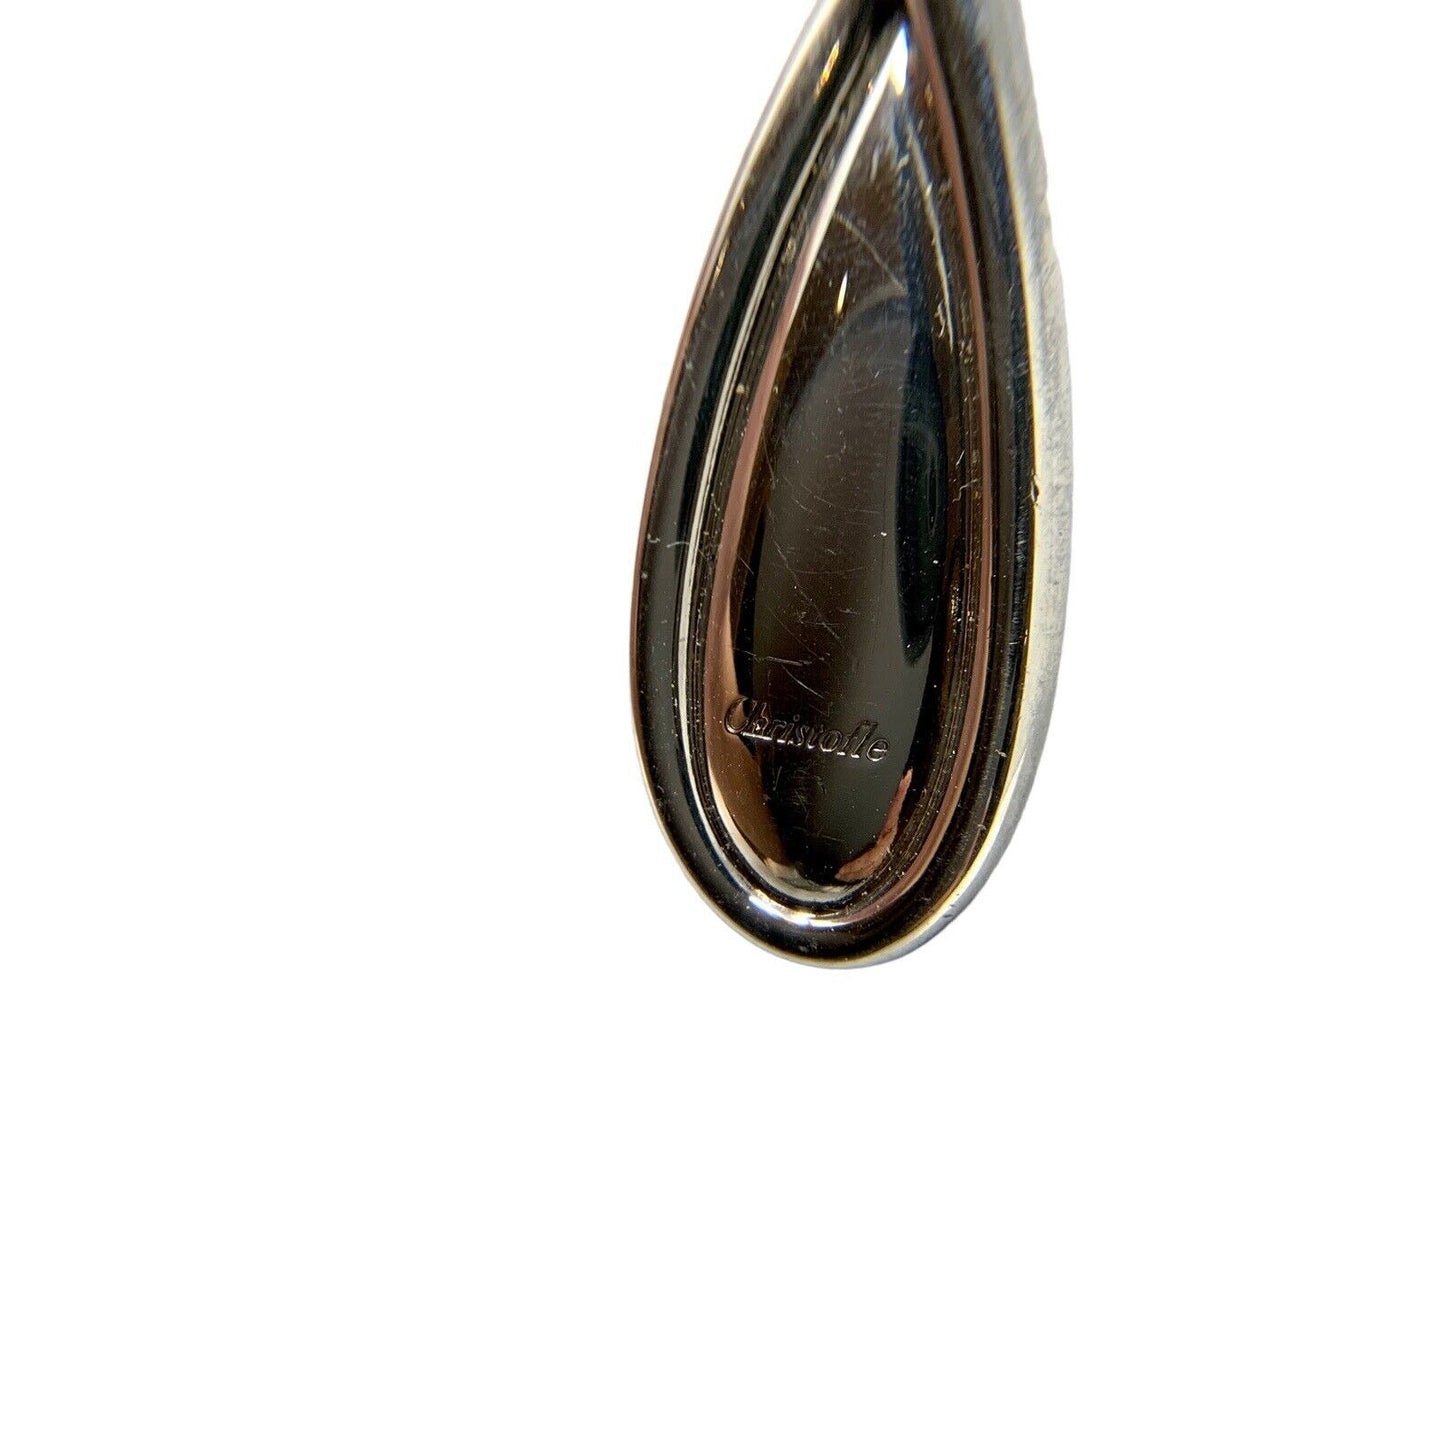 Large Silver Christofle And Teardrop Pendant on a Black Adjustable Cord